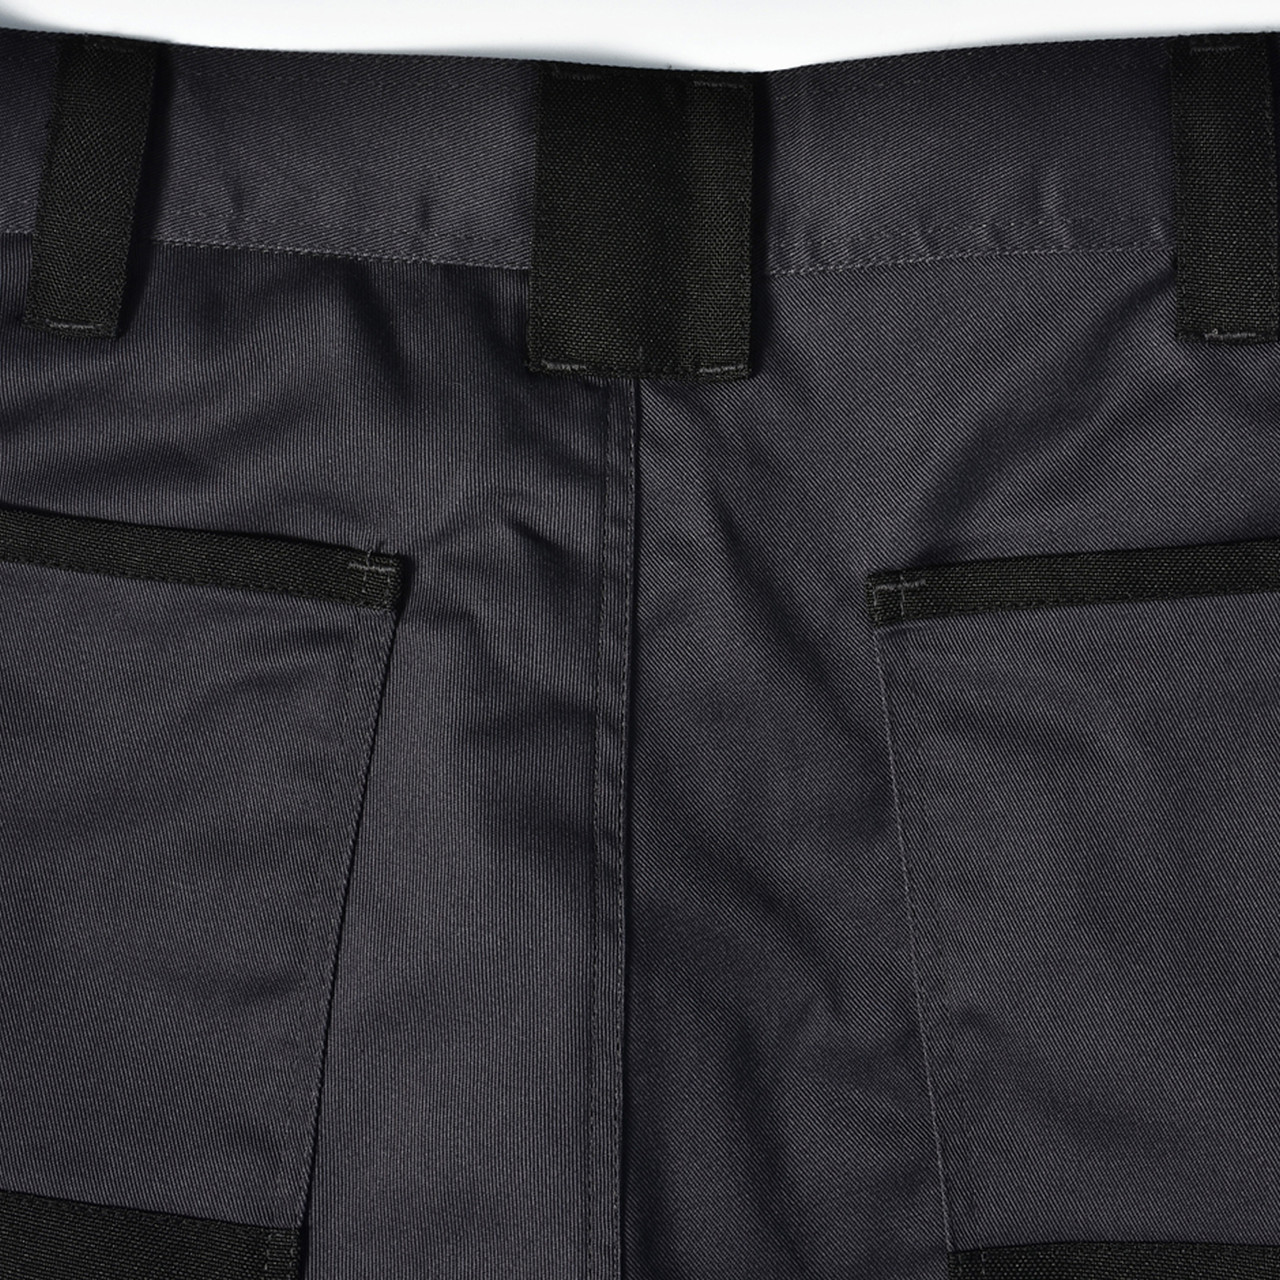 Unisex Utility Stretch Cargo Work Pants | Shop Work Safety Wear Online